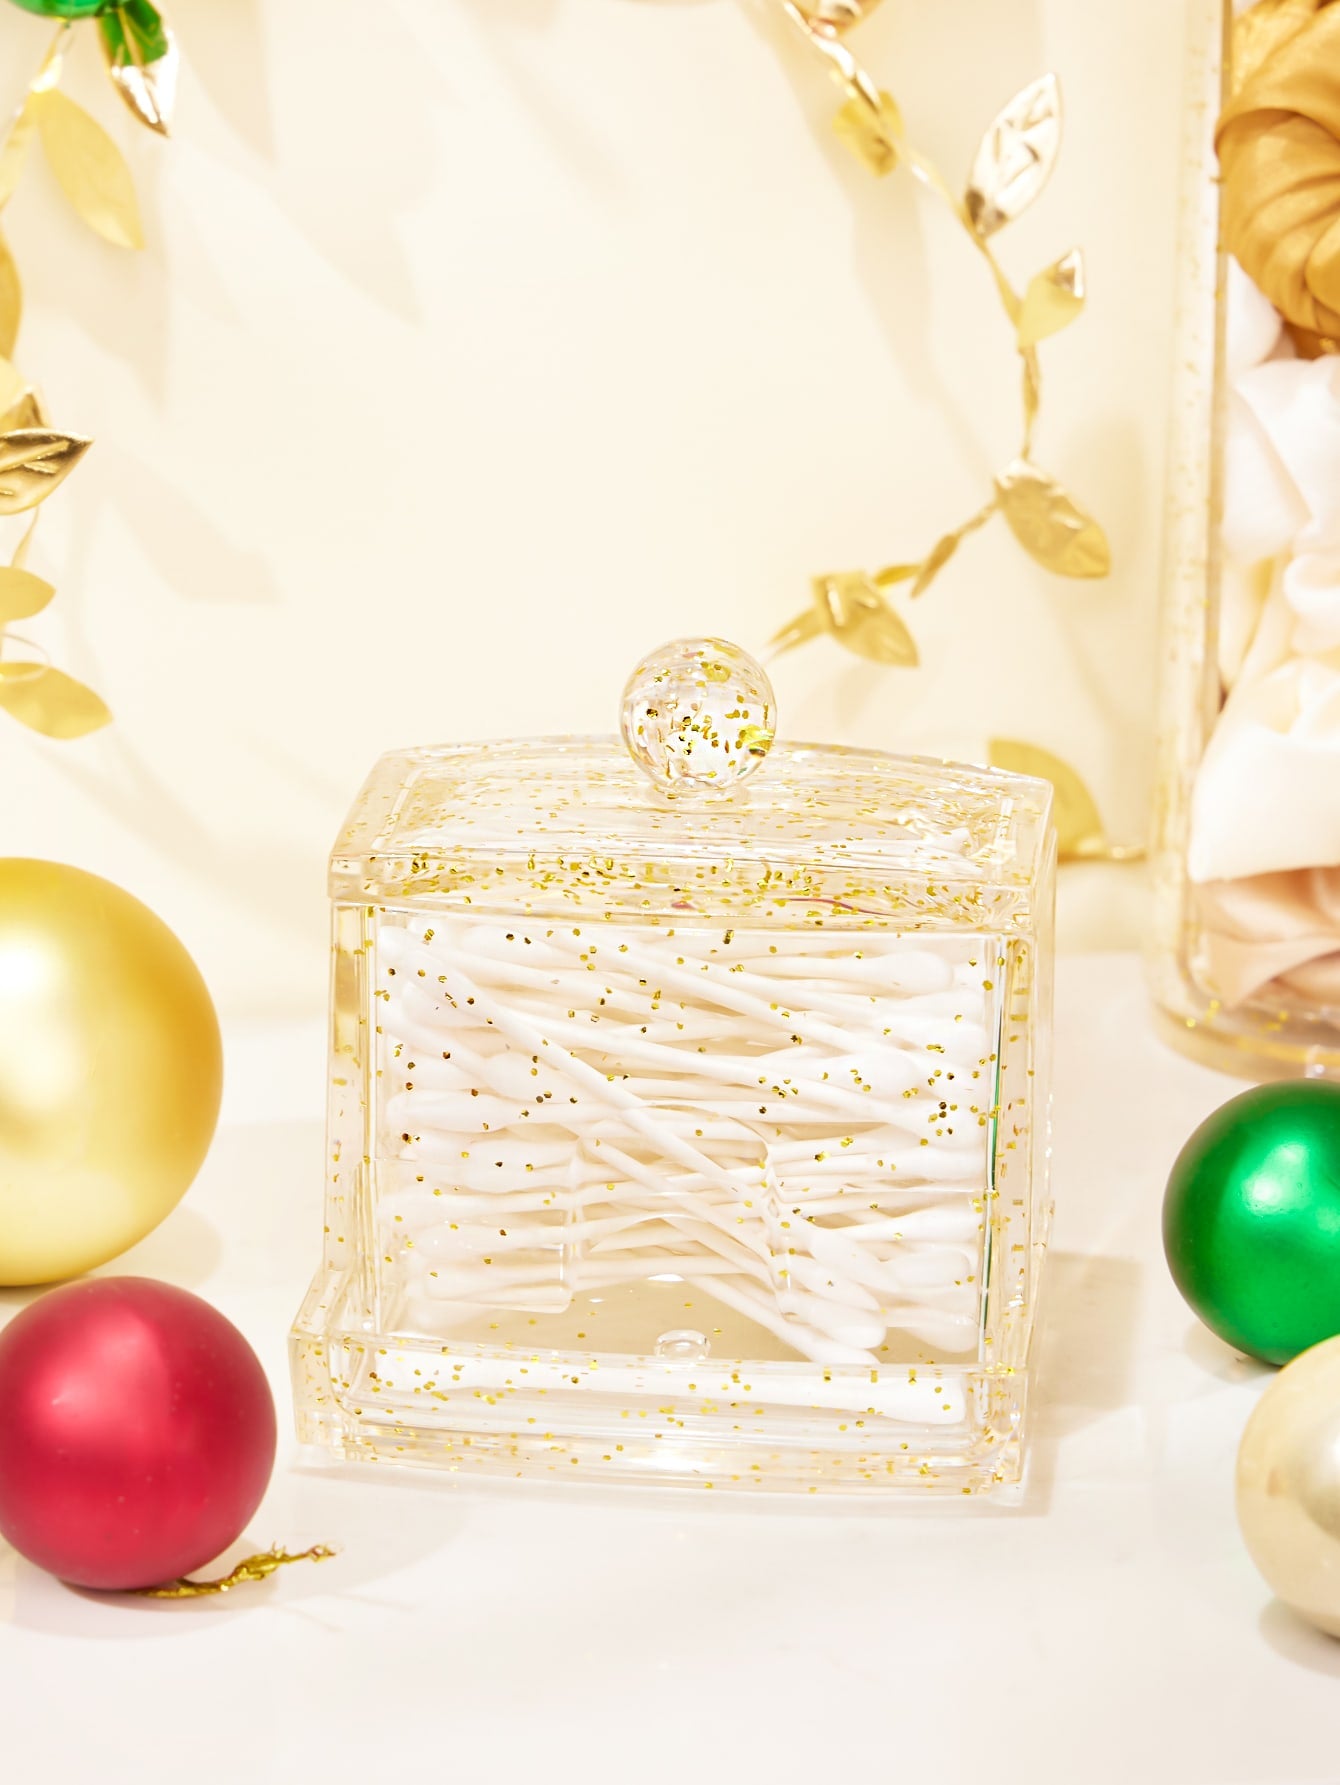 Cotton Swab Organizer Gold Glitter Holiday Gift